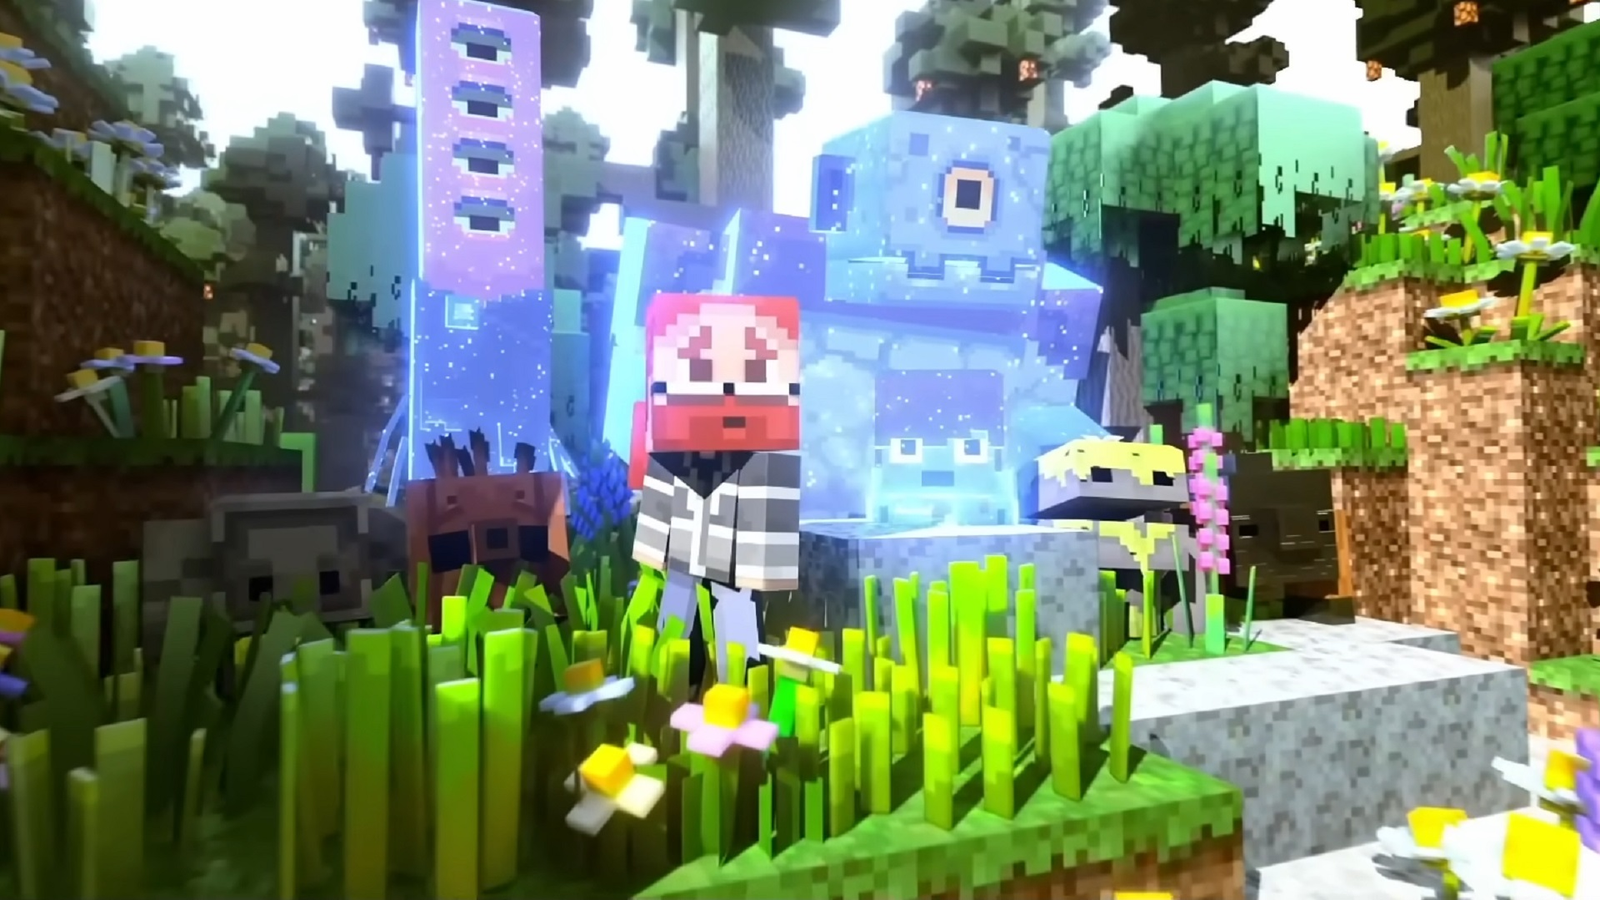 Minecraft: PlayStation 3 Edition Trailer 